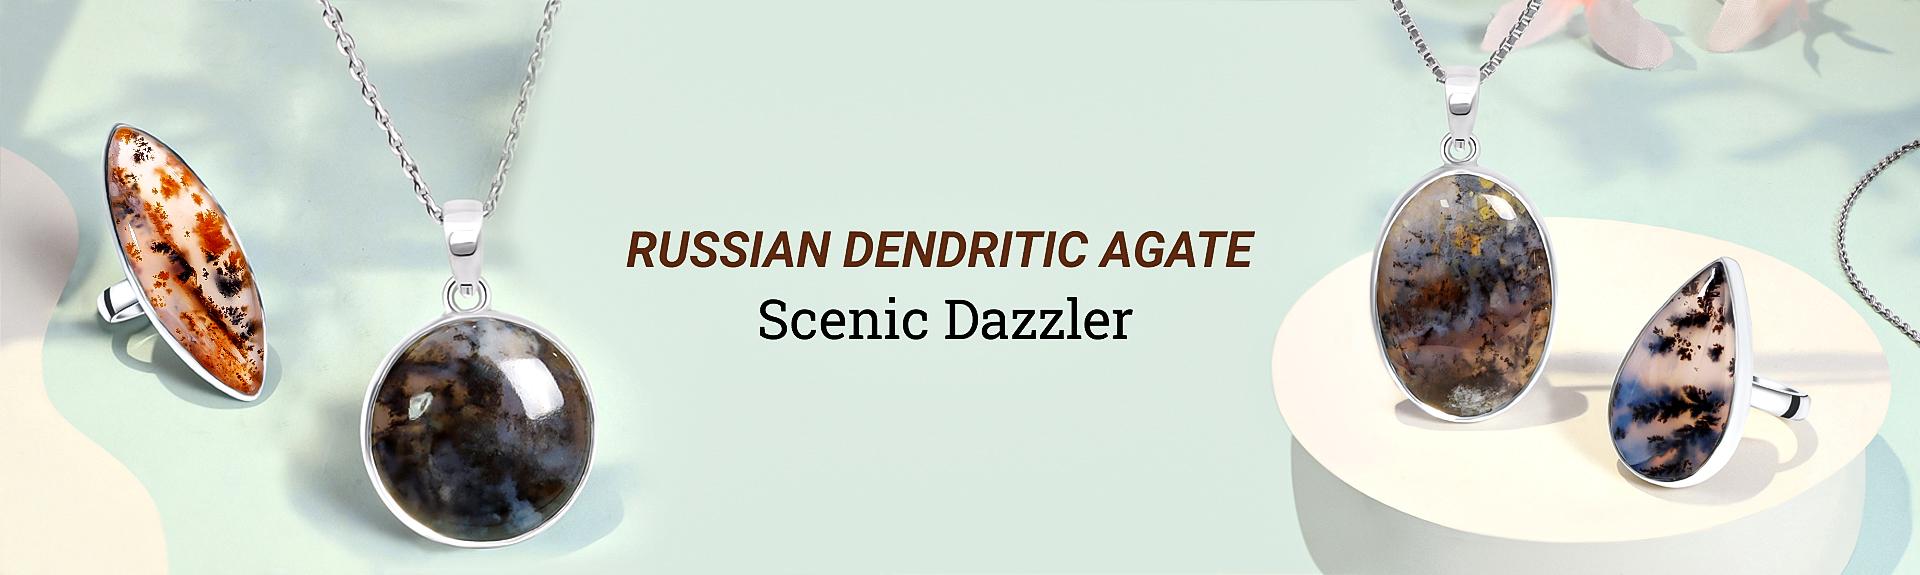 DENDRITIC AGATE (RUSSIAN)